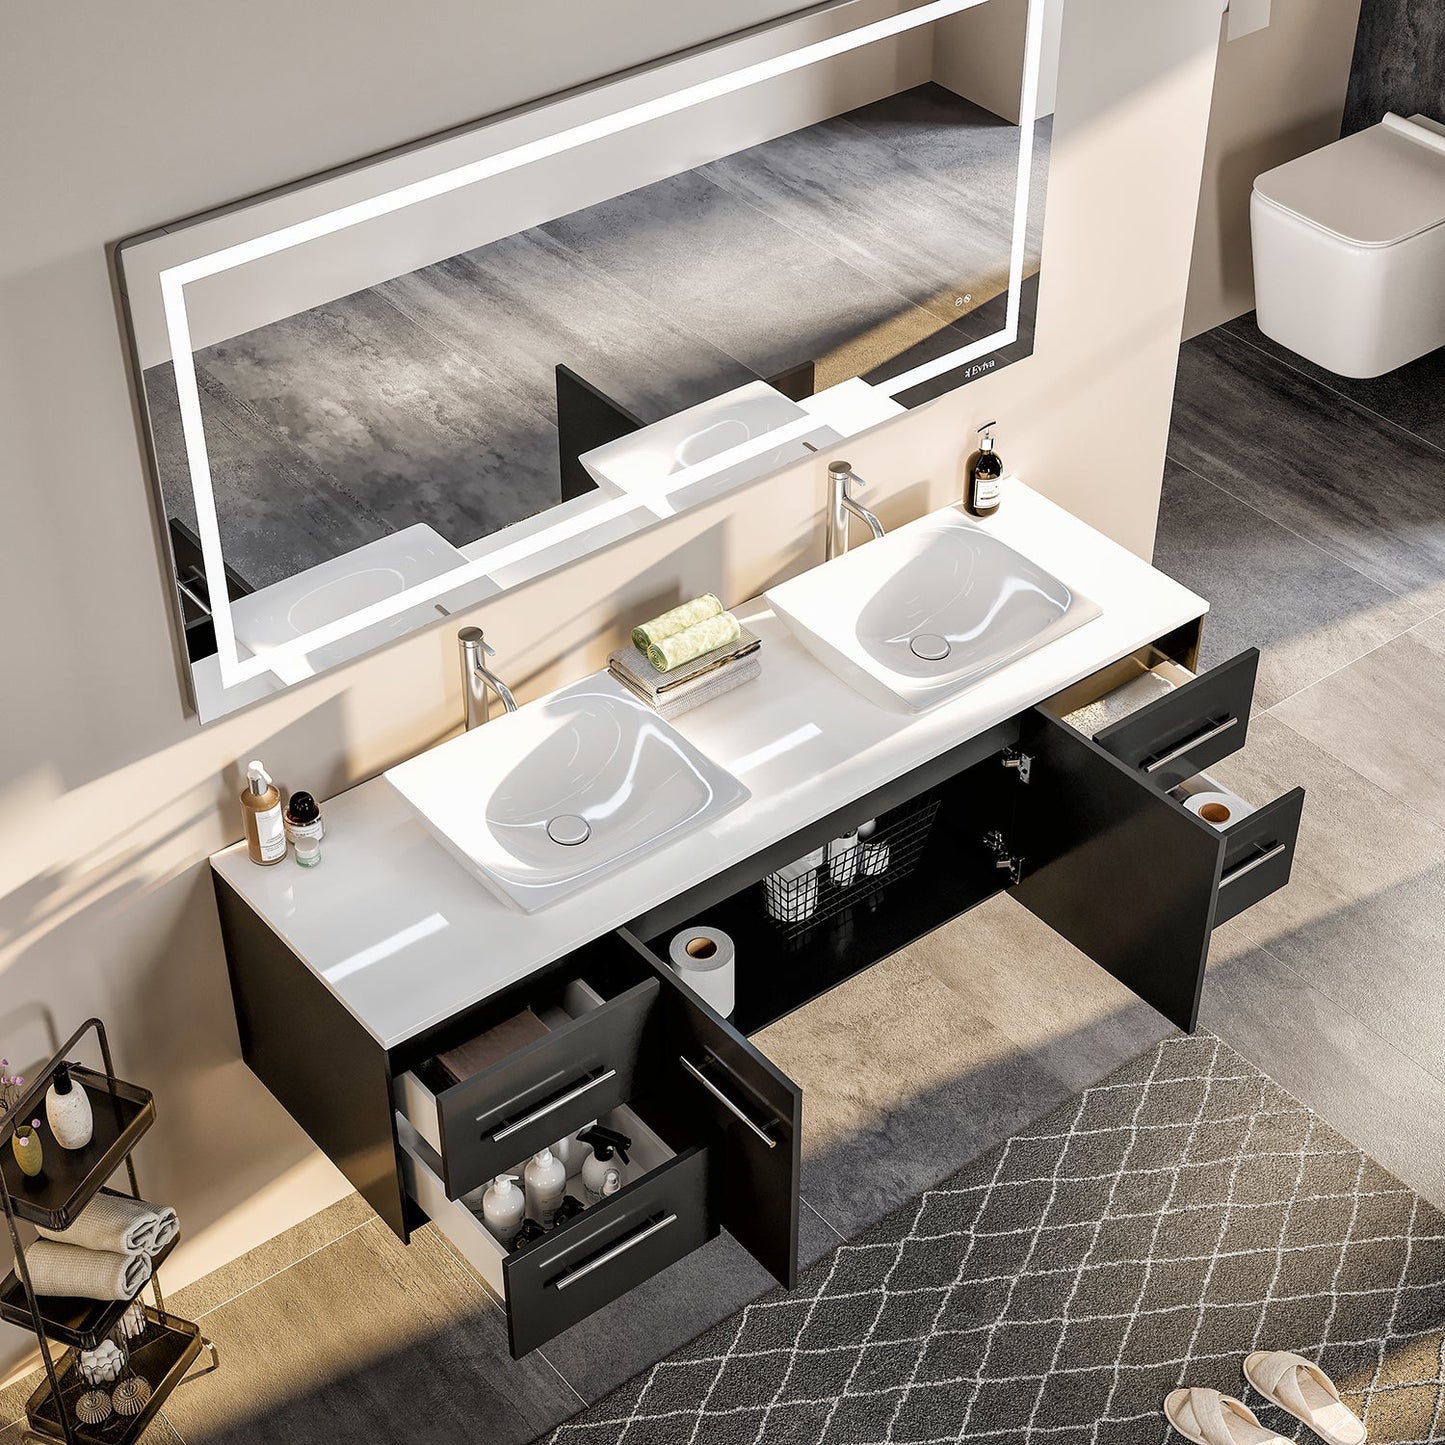 Wave 72"W x 22"D Espresso Double Sink Bathroom Vanity with White Quartz Countertop and Vessel Porcelain Sink